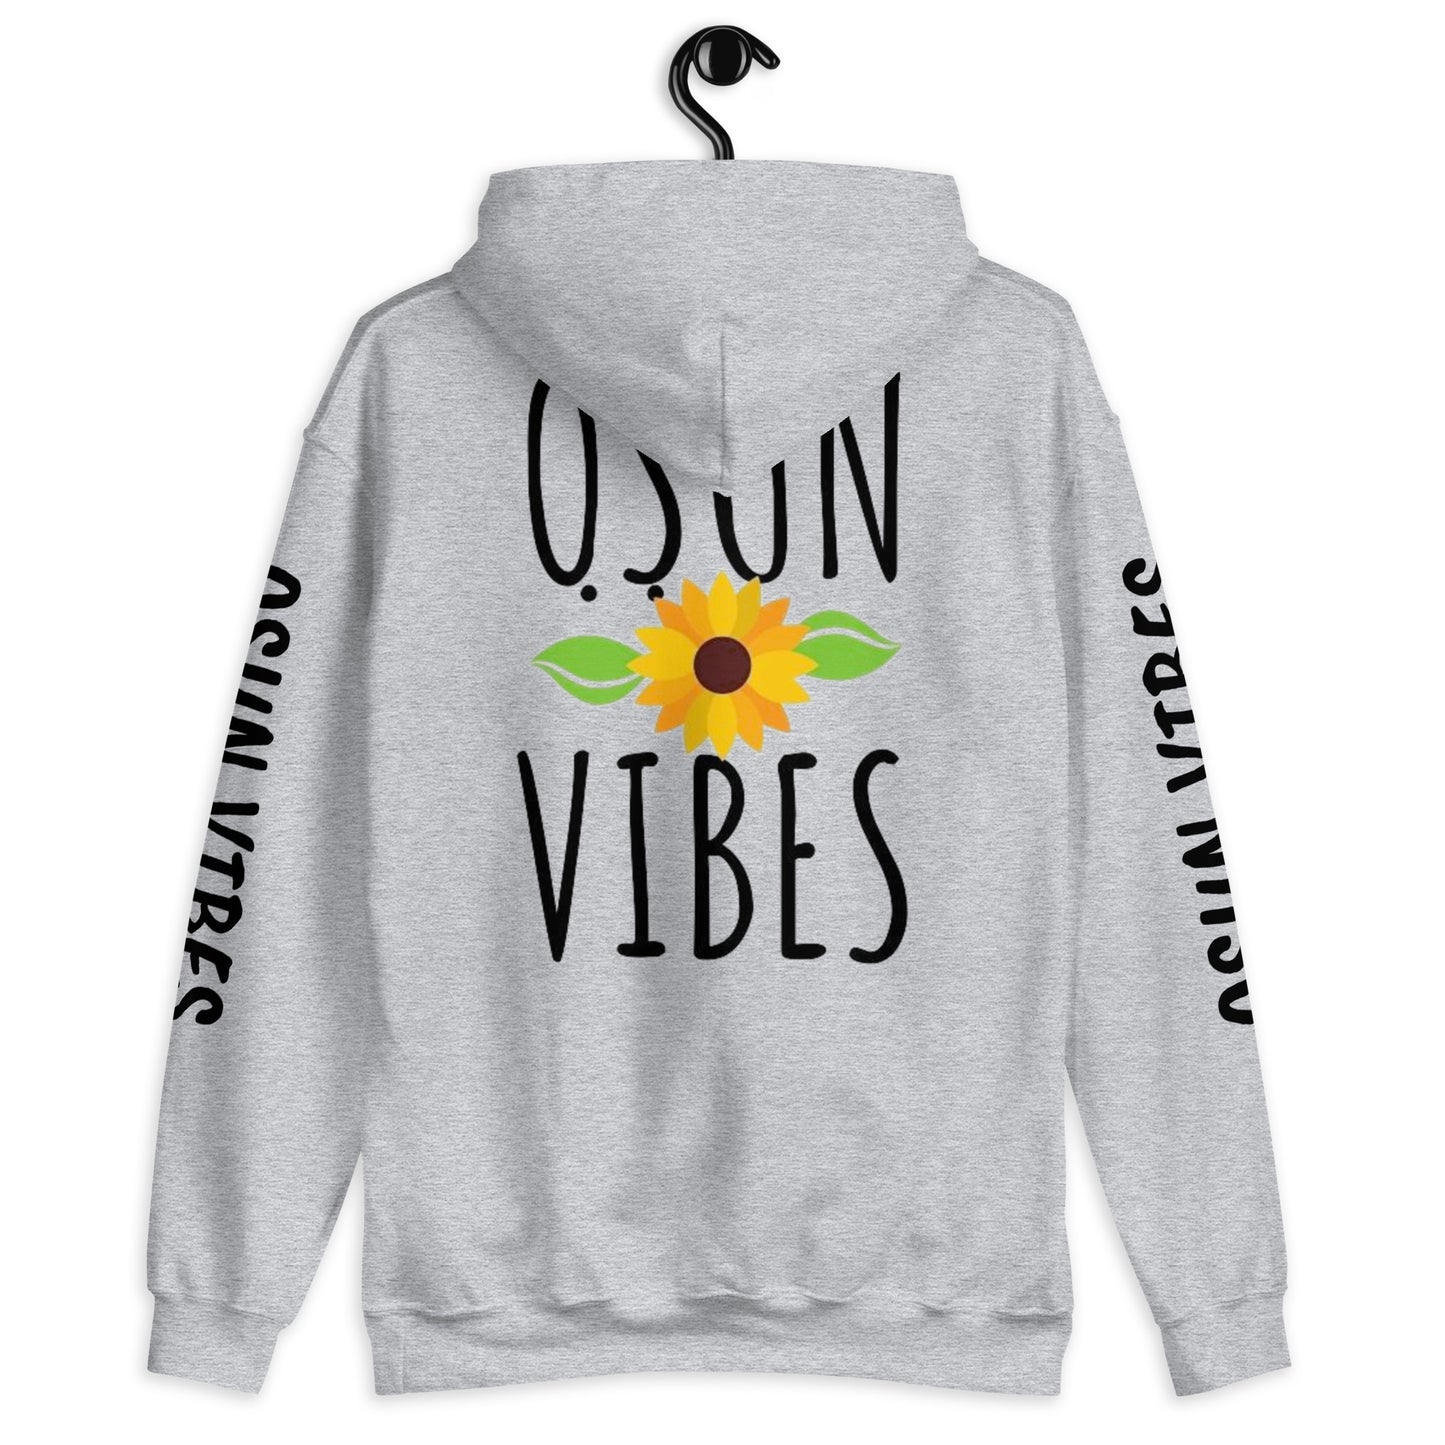 OSHUN VIBES Sunflower Unisex Hoodie